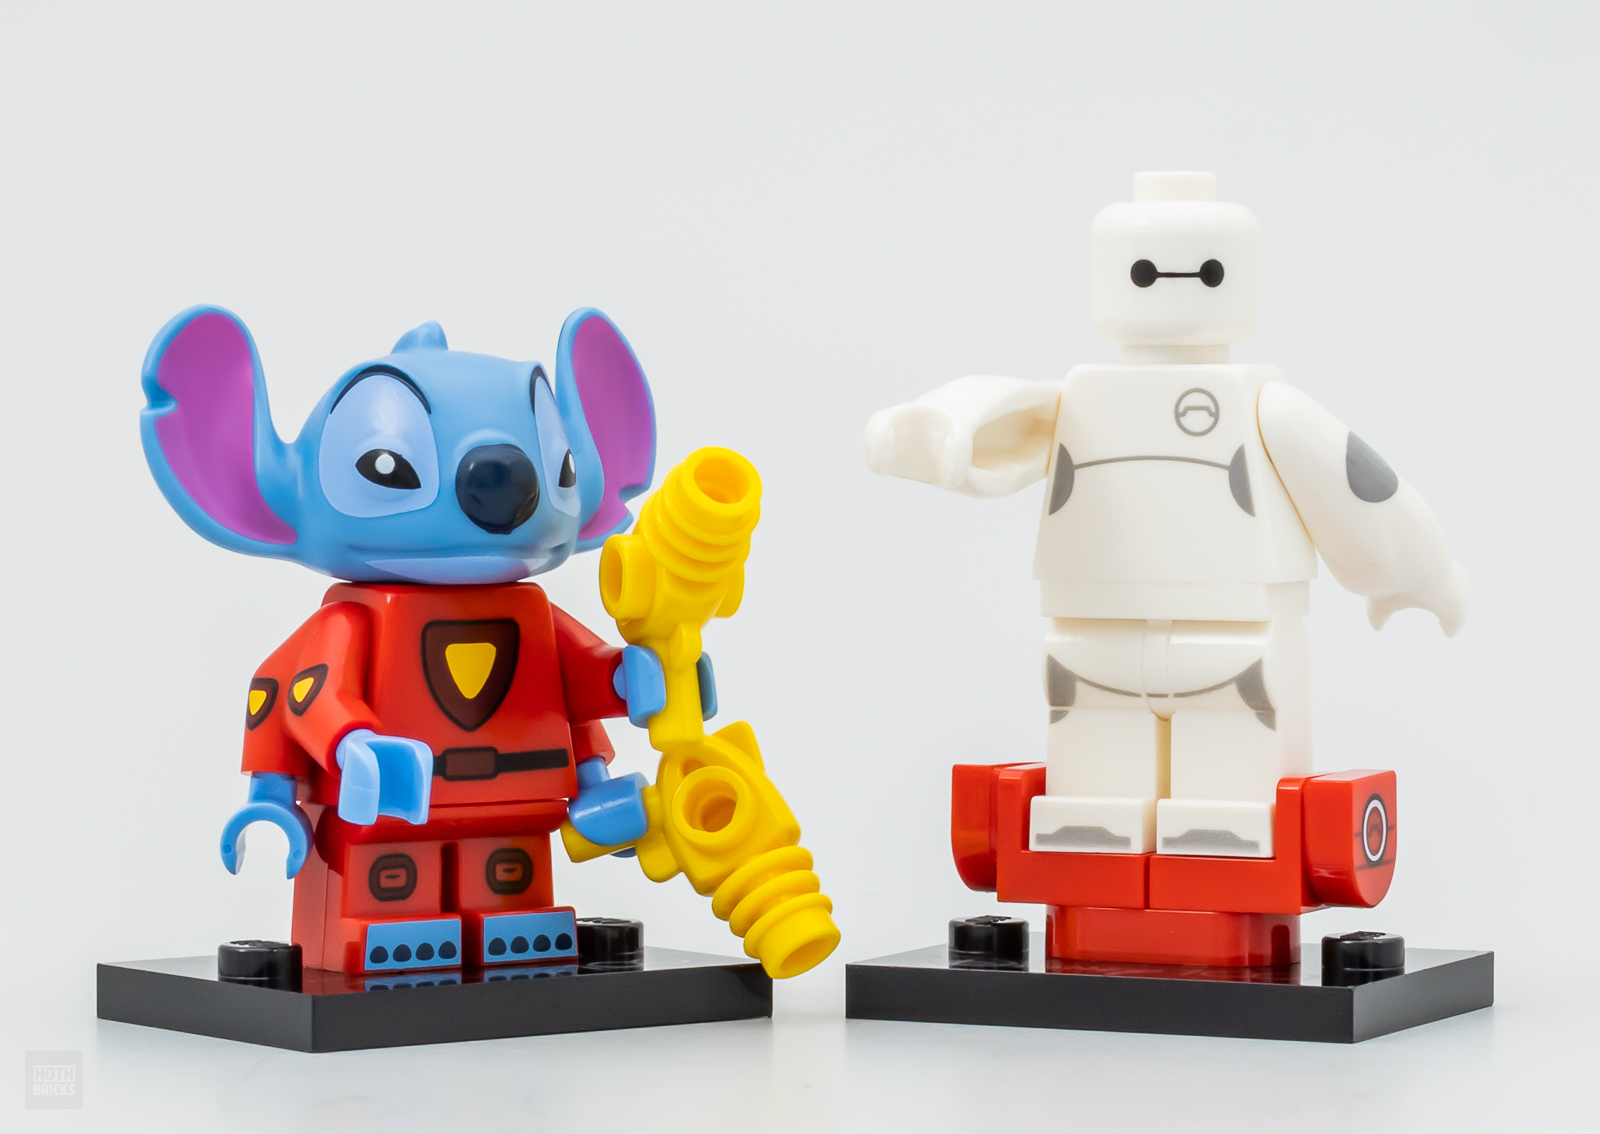 2023 Lego Minifigures Disney 100 Stitch 71038